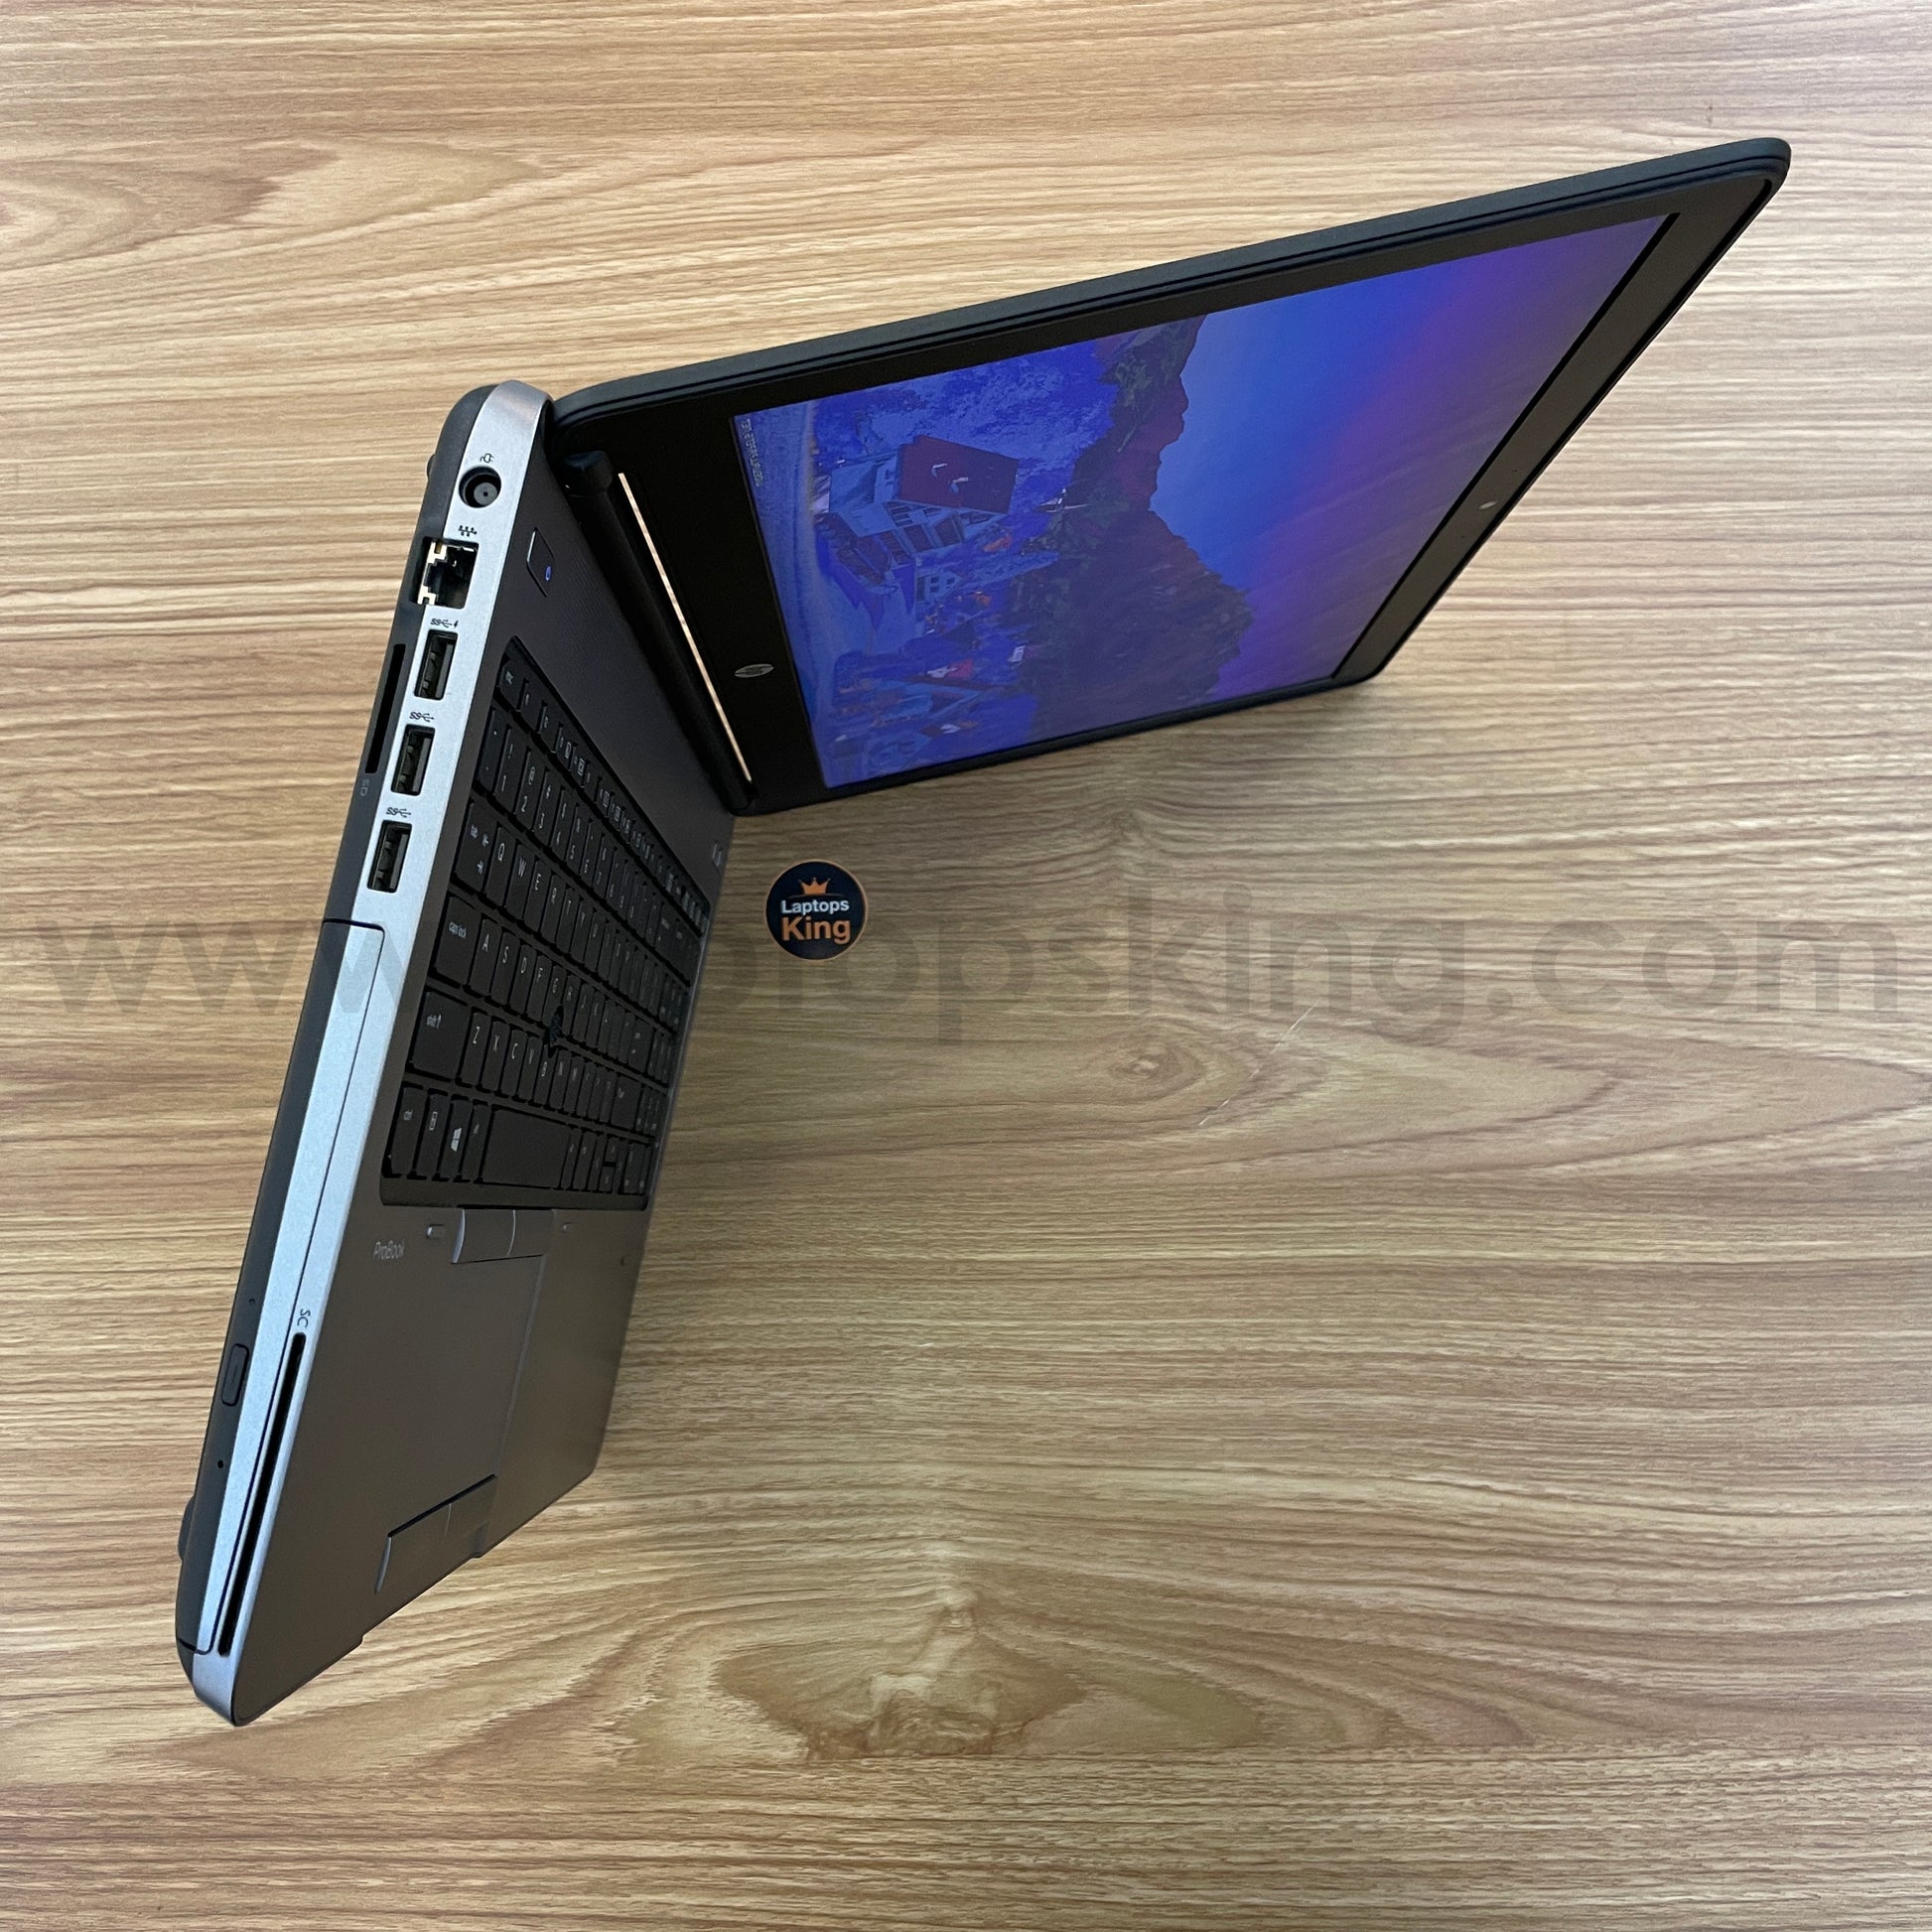 Hp ProBook 640 Core i7 Laptop Offers (Open Box) – Laptops King